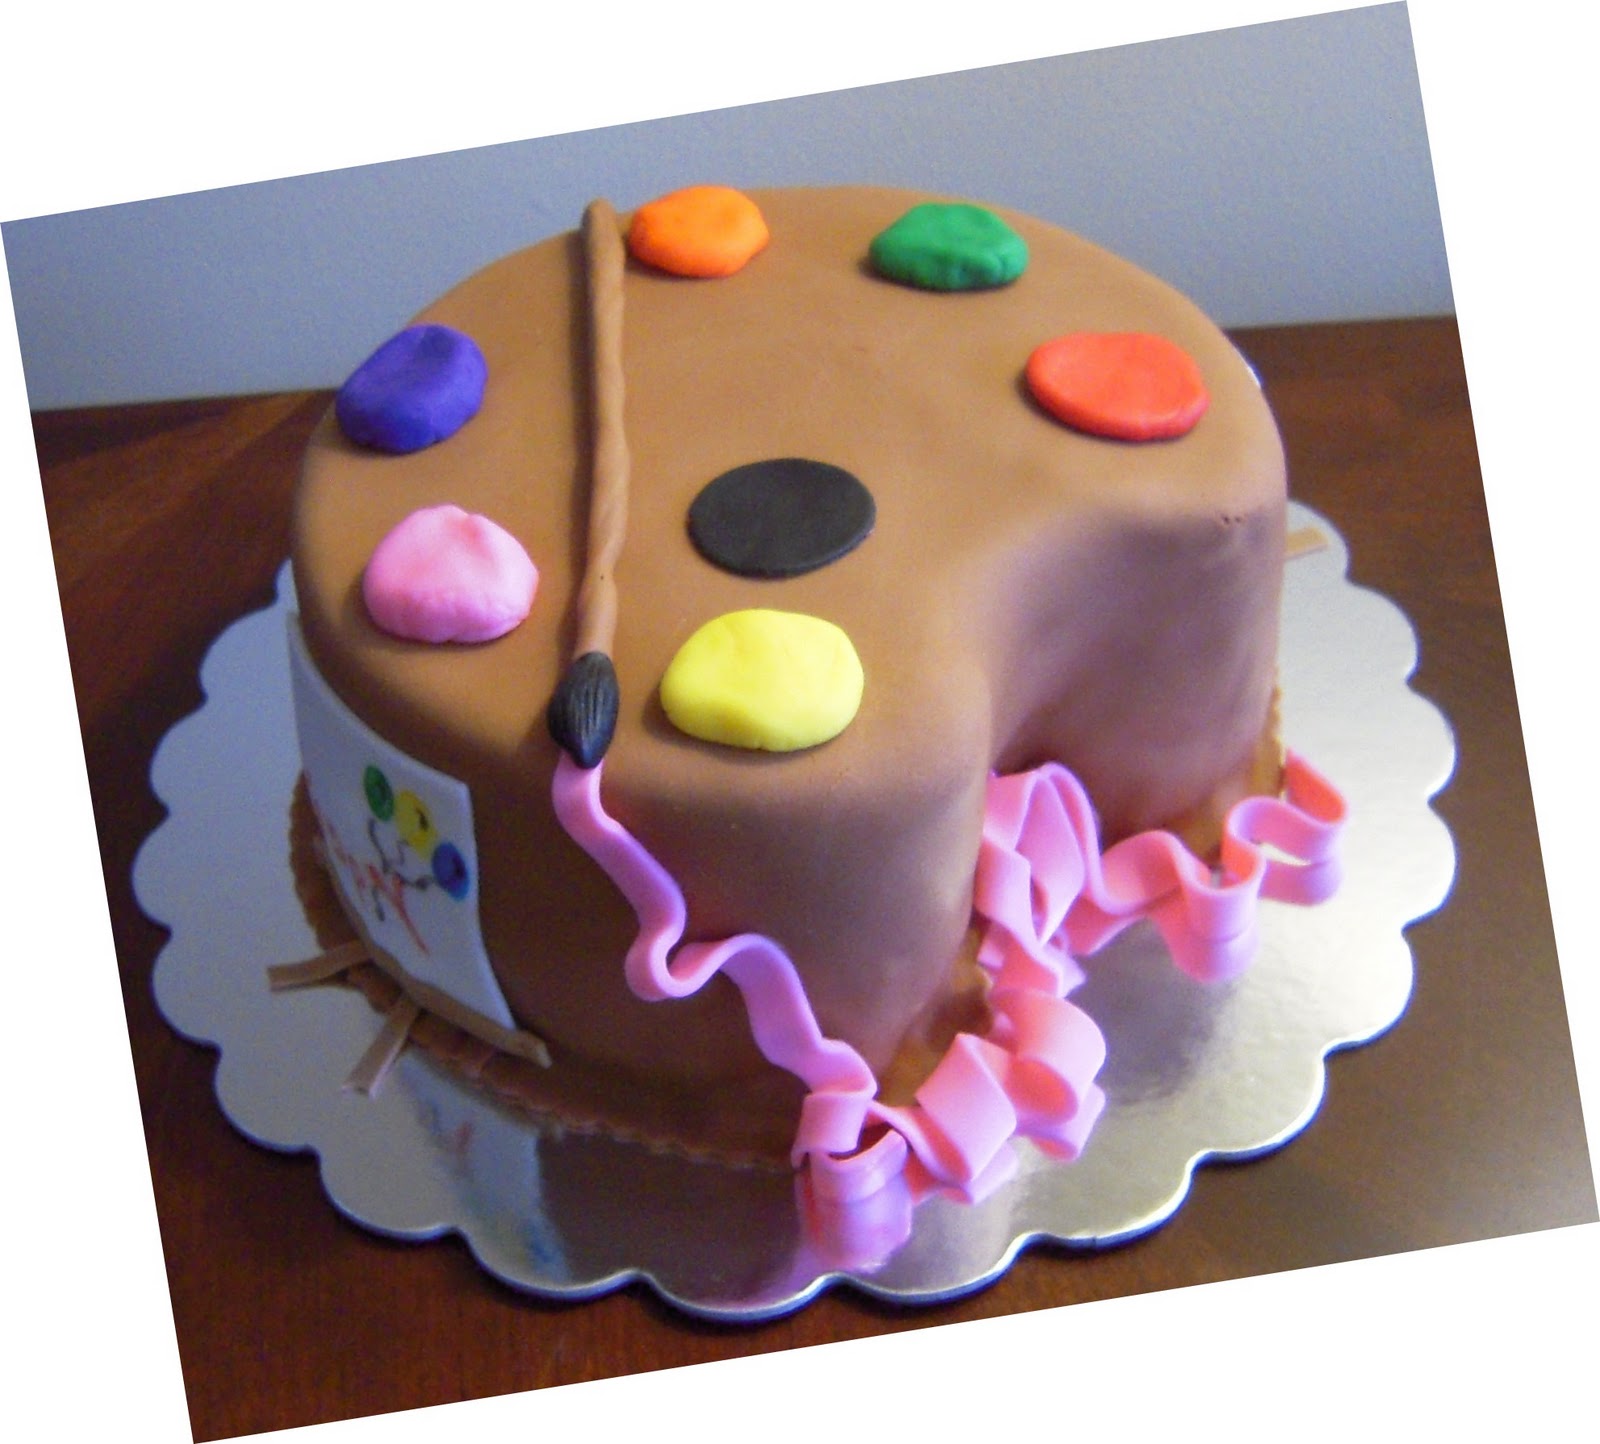 Icing Makes the Cake: Art Palette Birthday Cake